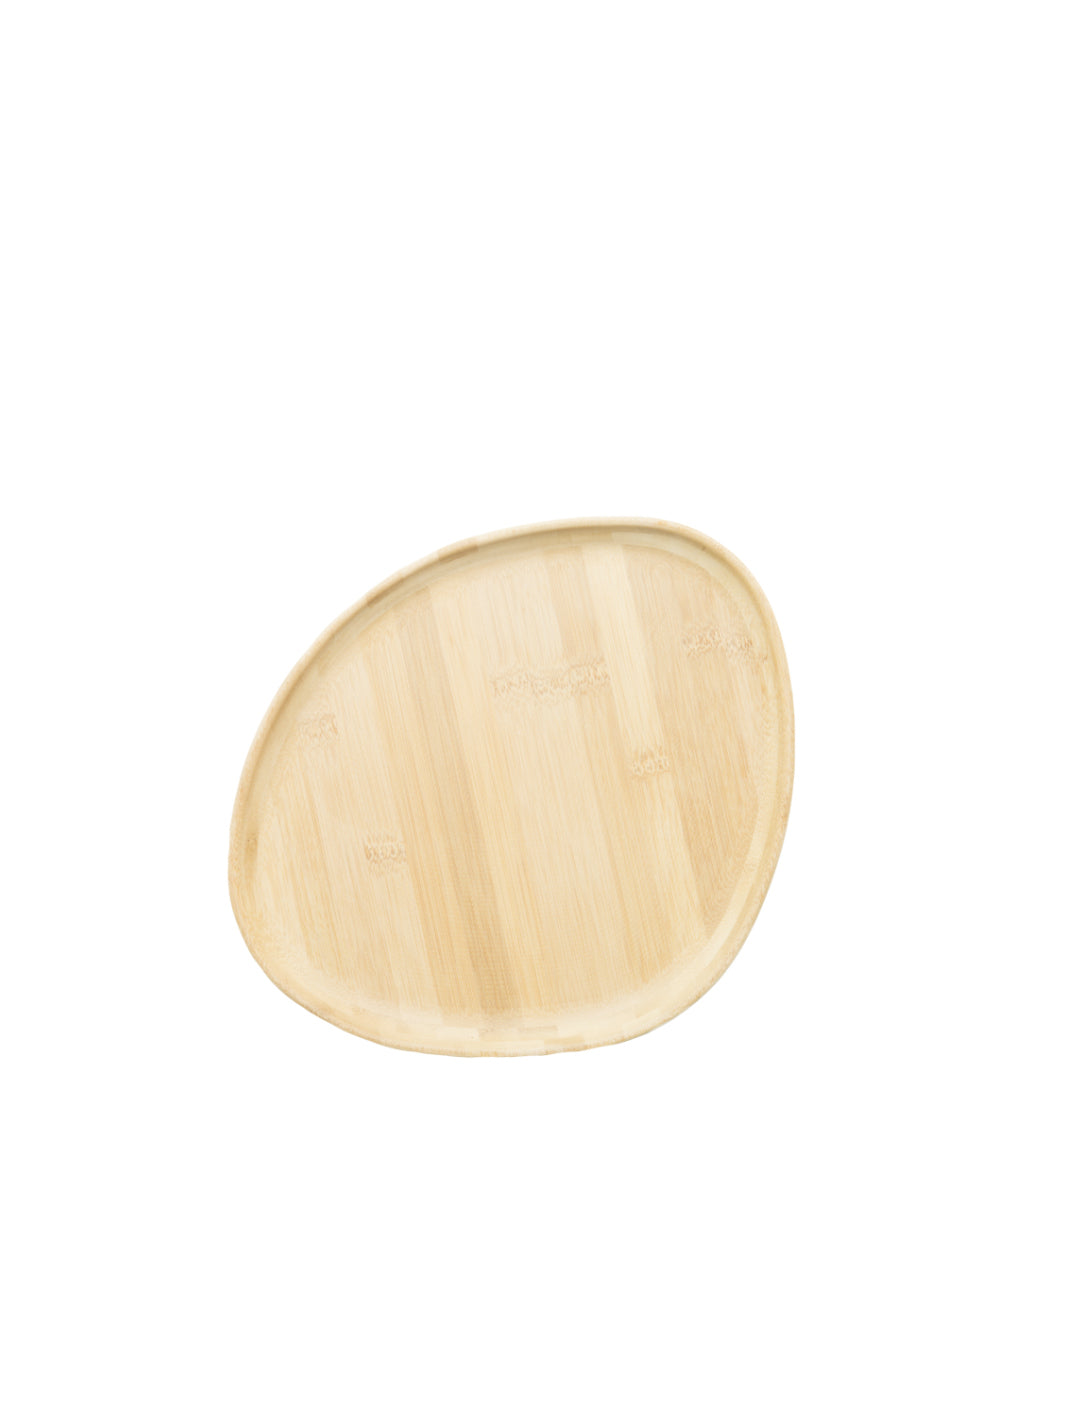 COOKPLAY Yayoi Small Tray (Bamboo) (31x29cm/12.2x11.4in)